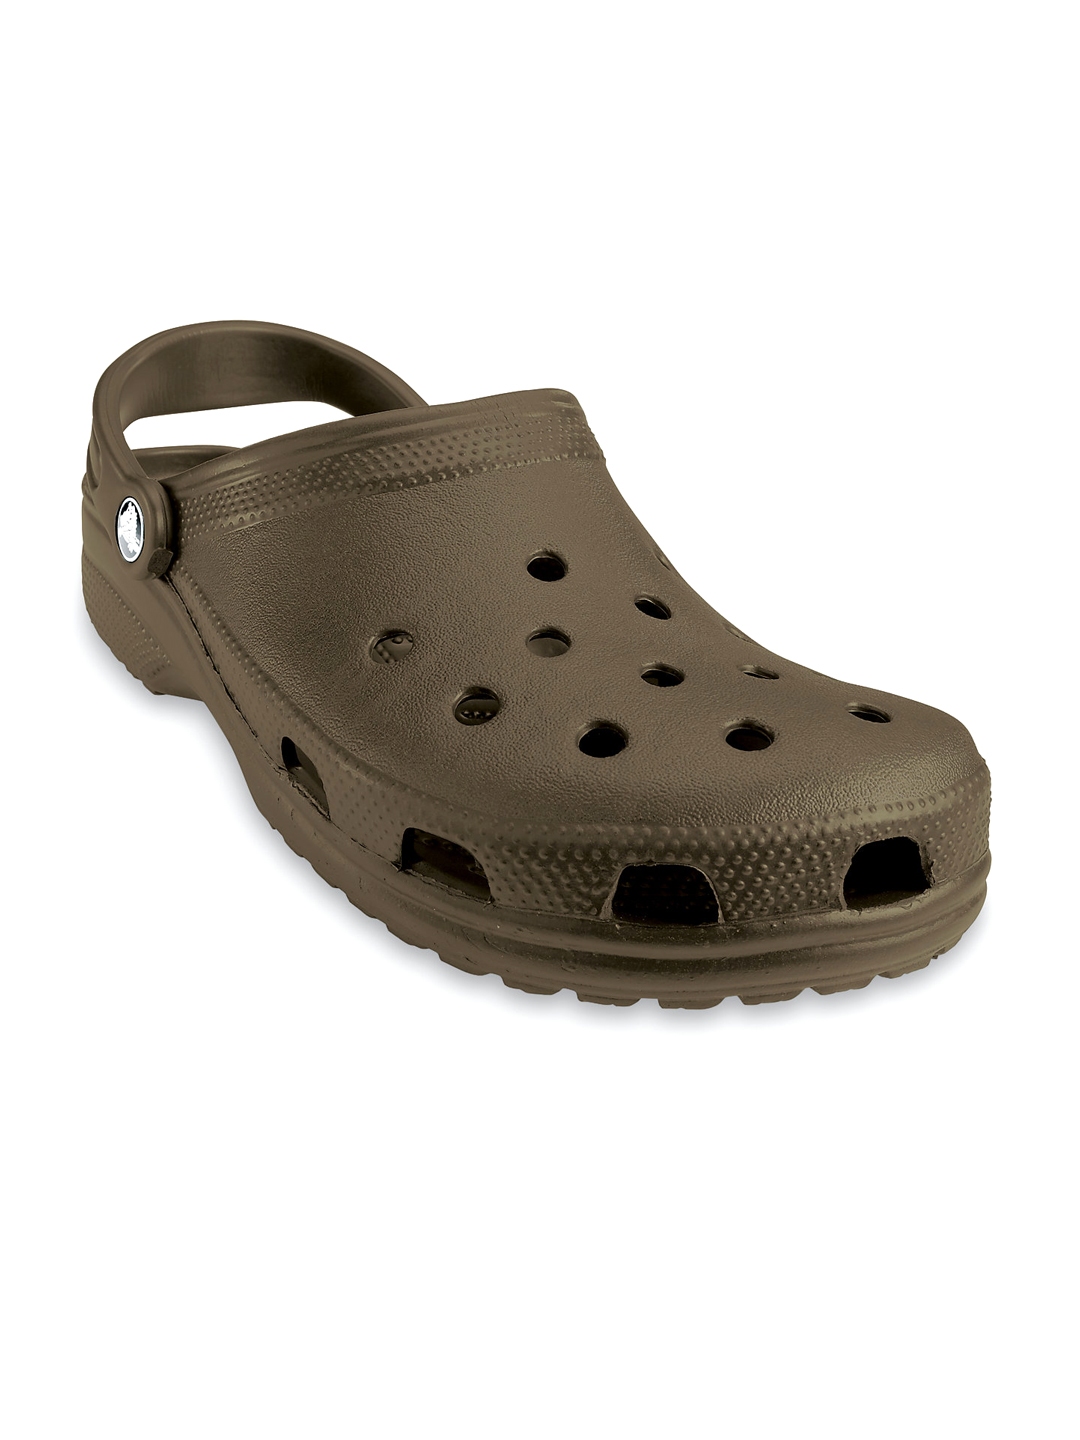 brown crocs